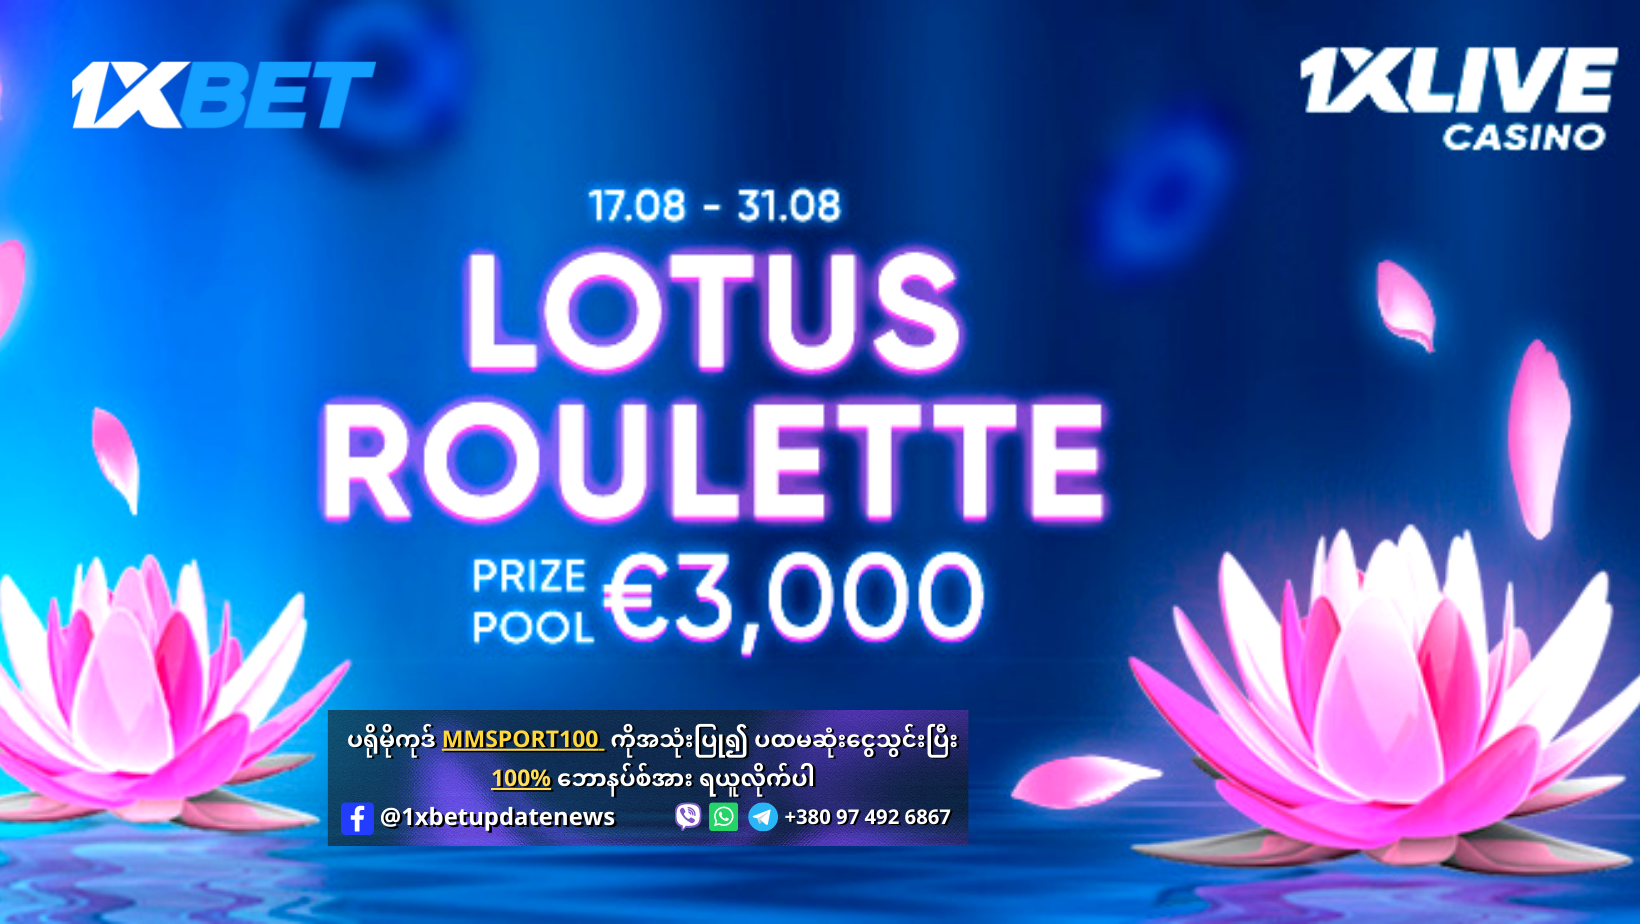 Lotus Roulette 1xBet Promotion